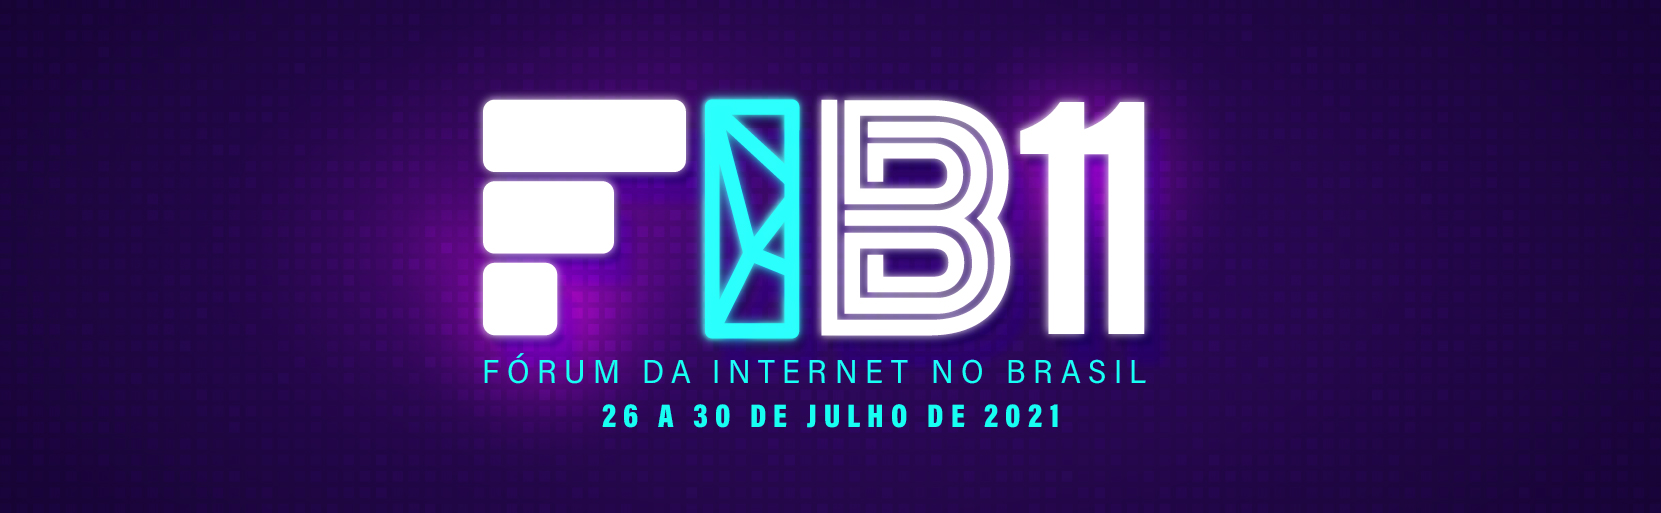 Banner FIB 11 - Fórum da Internet no Brasil